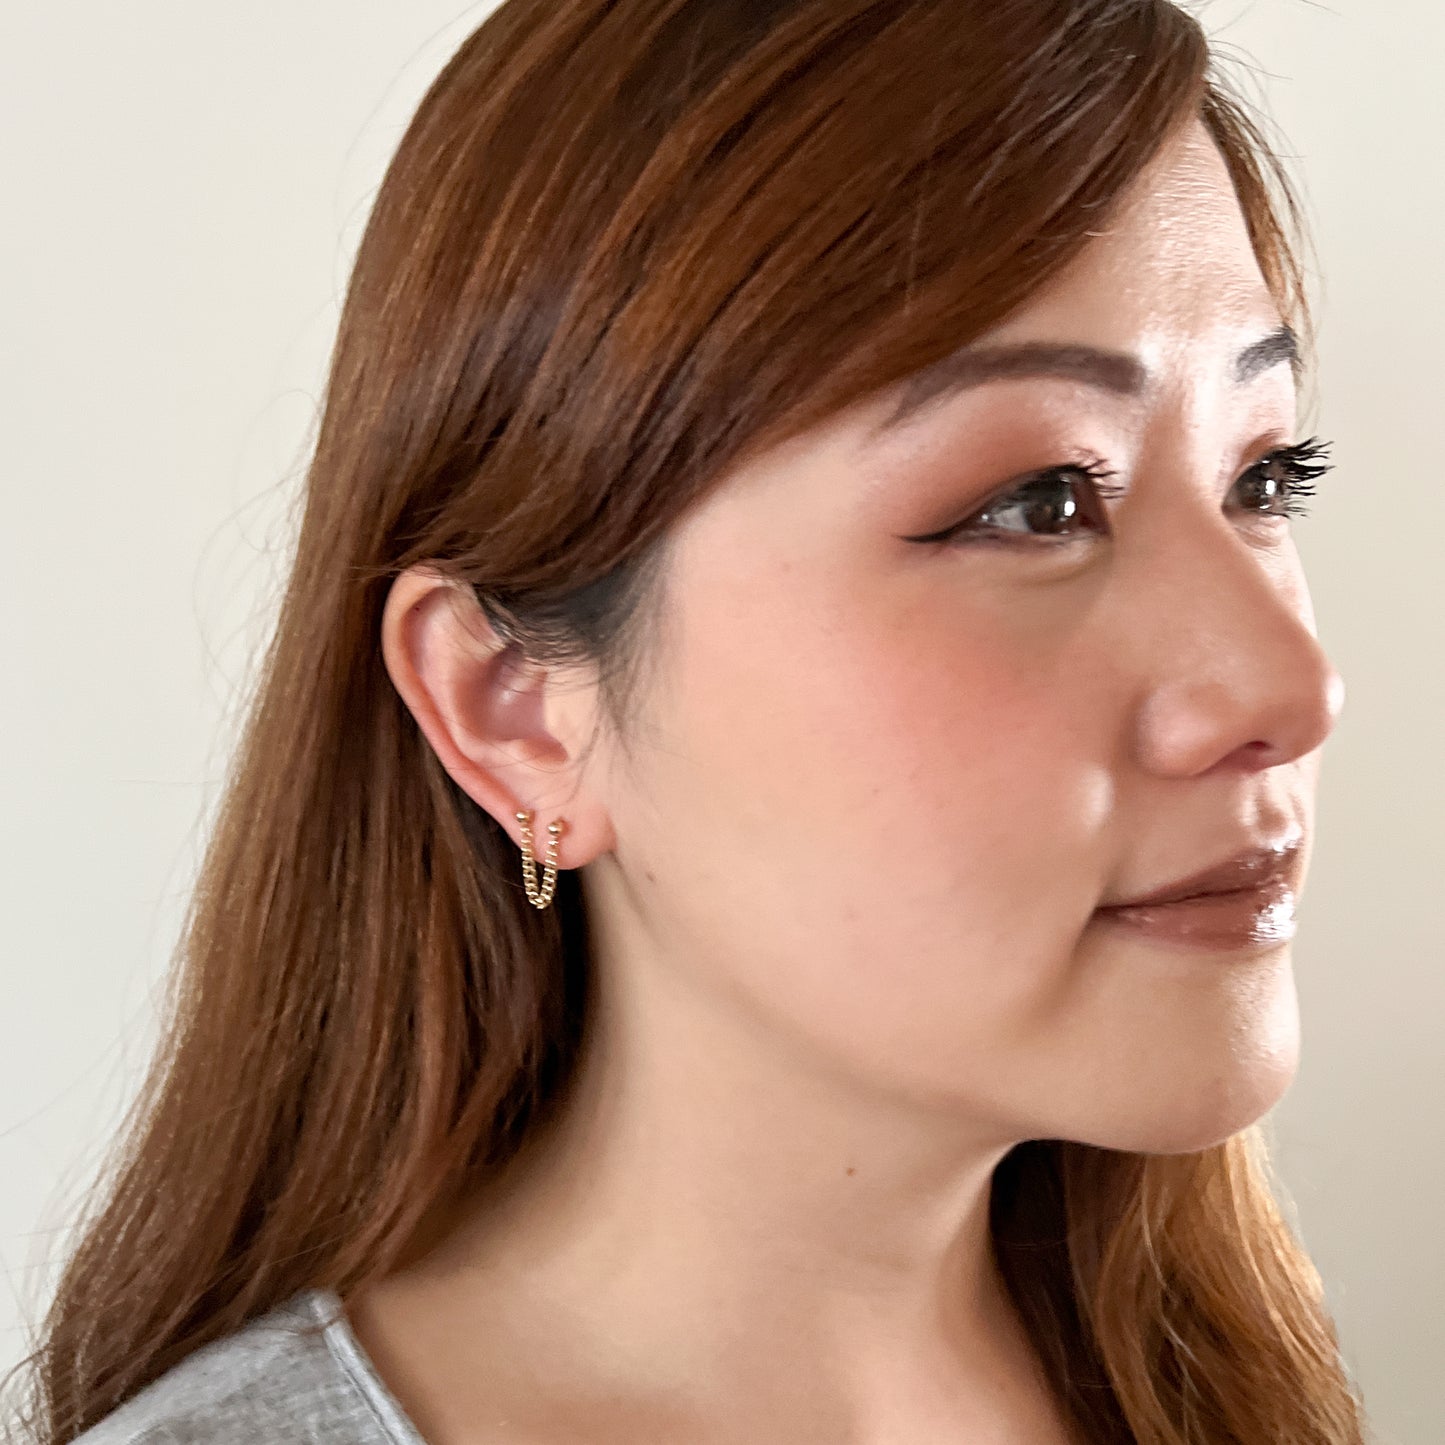 Earrings for Double Piercings - Sterling Silver or 14k Gold Filled